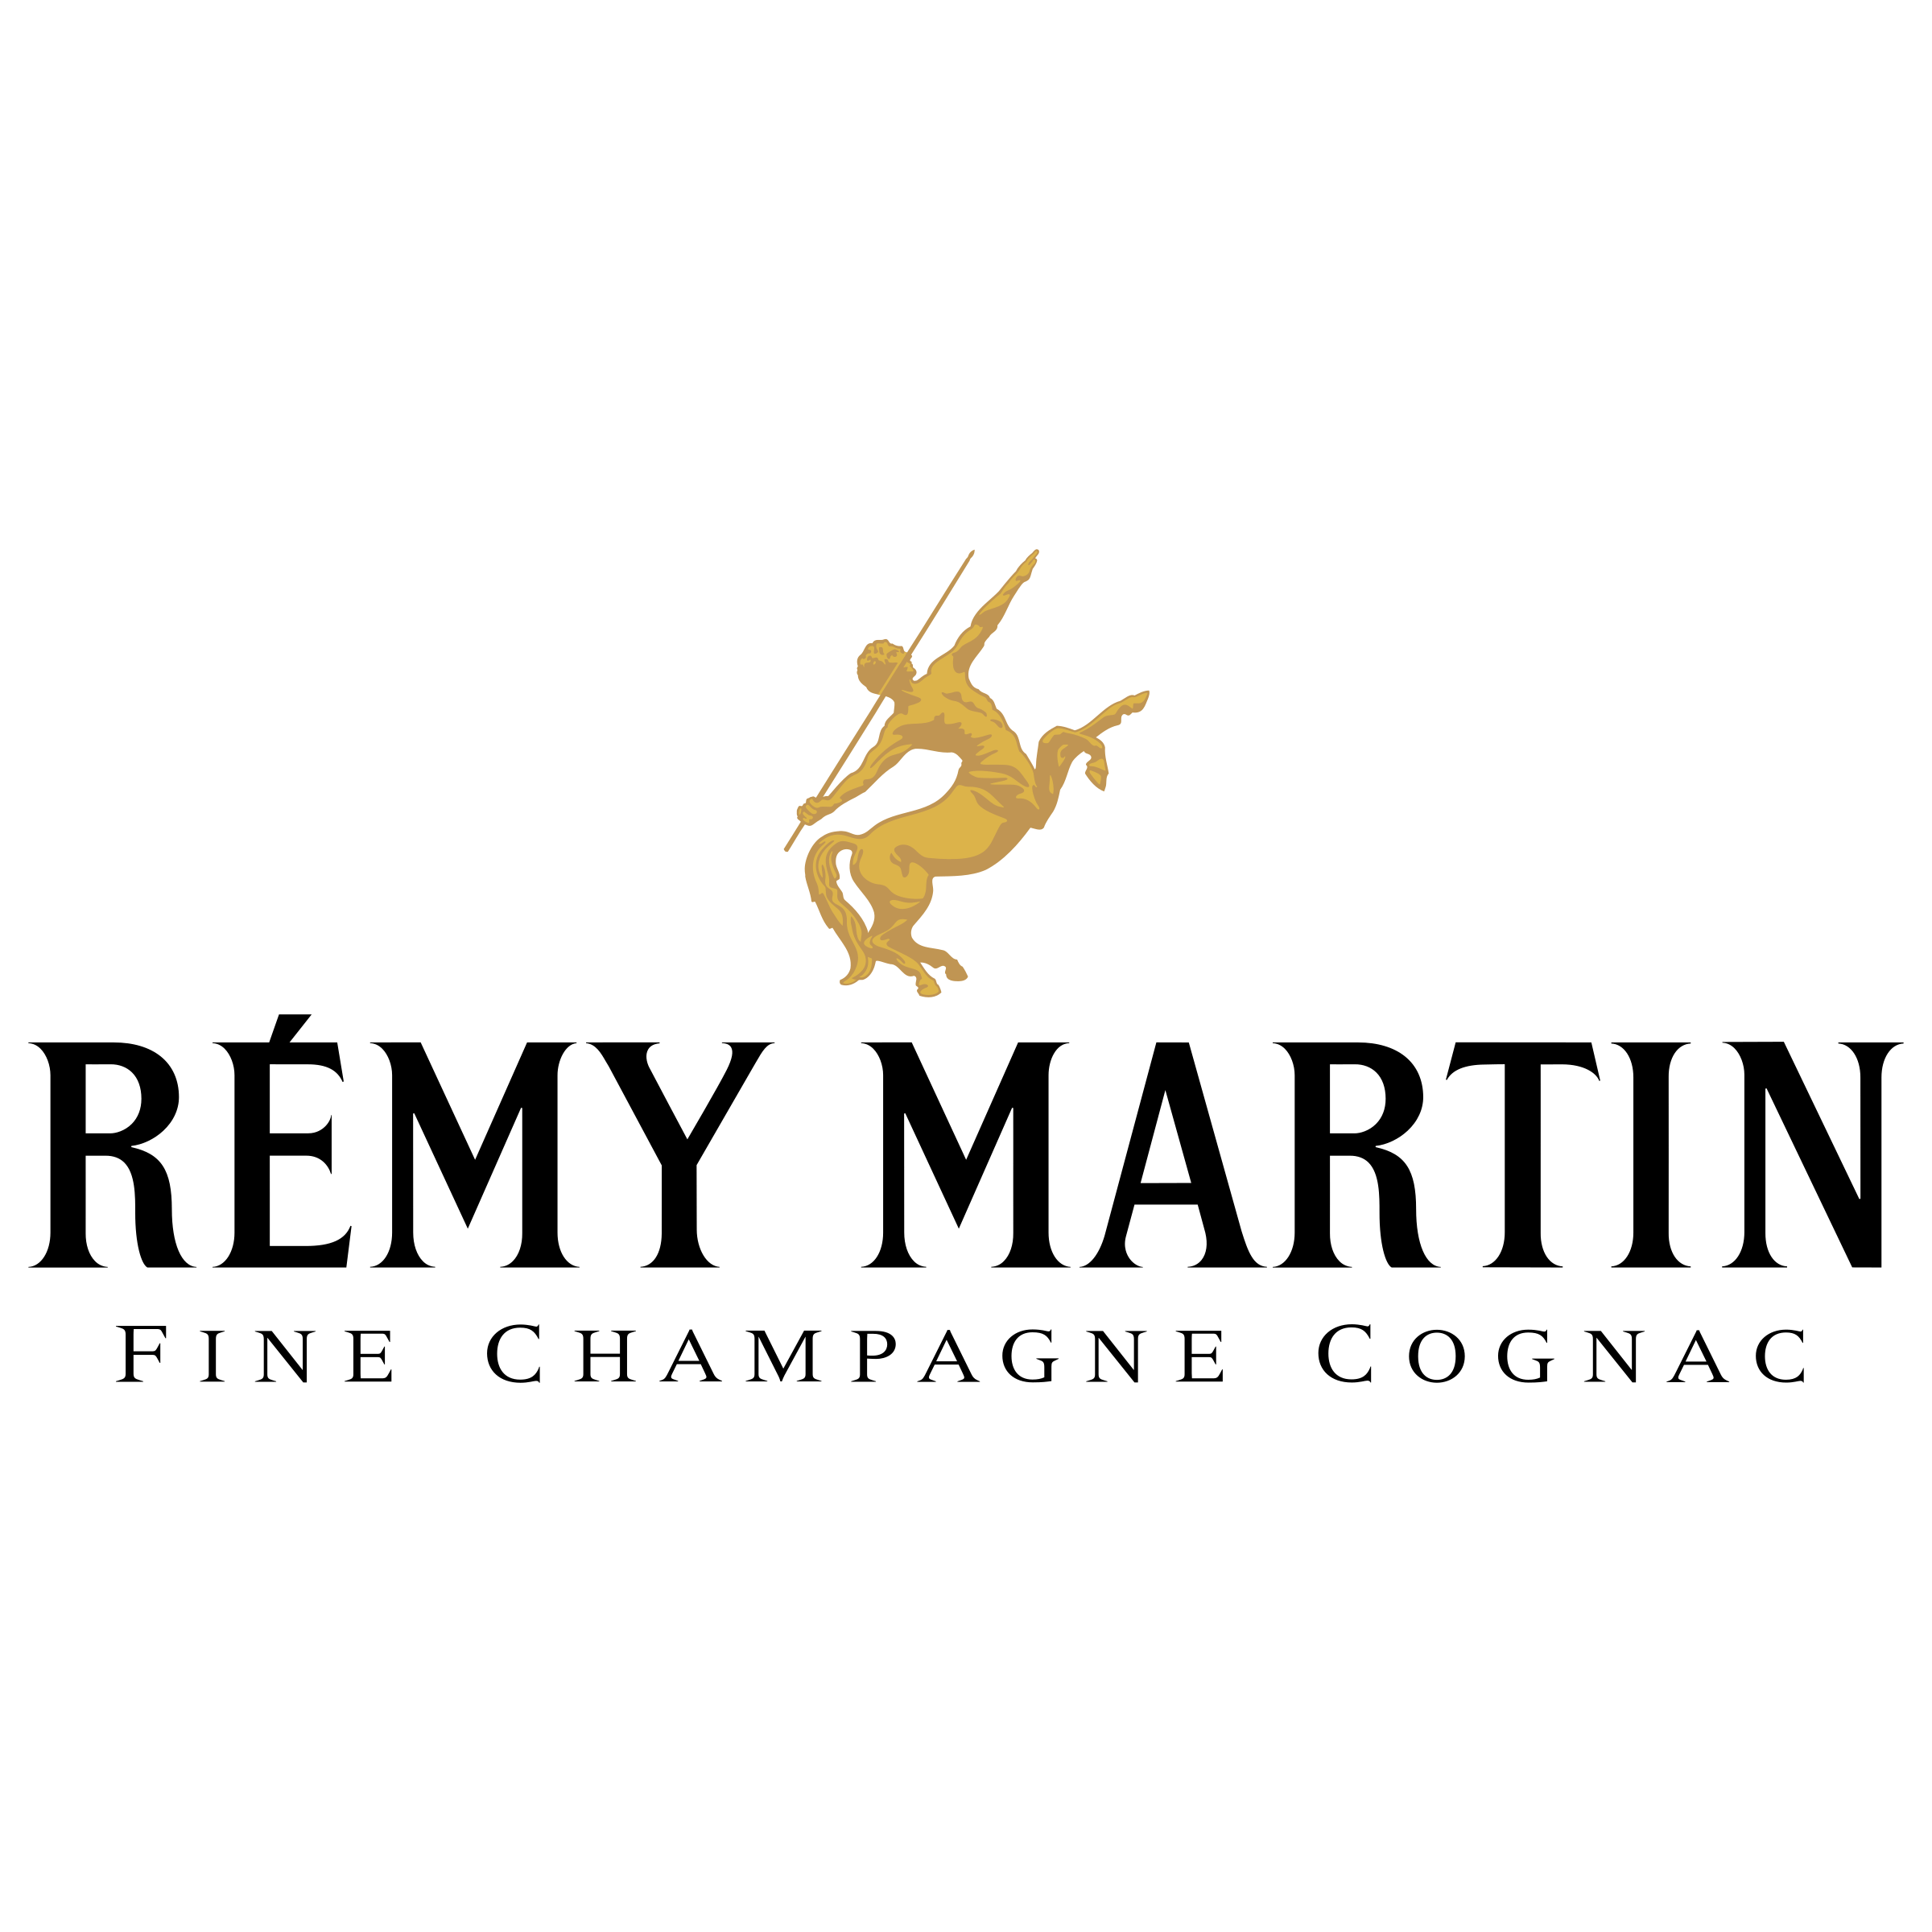 Martin Logo - Remy Martin Logo PNG Transparent & SVG Vector